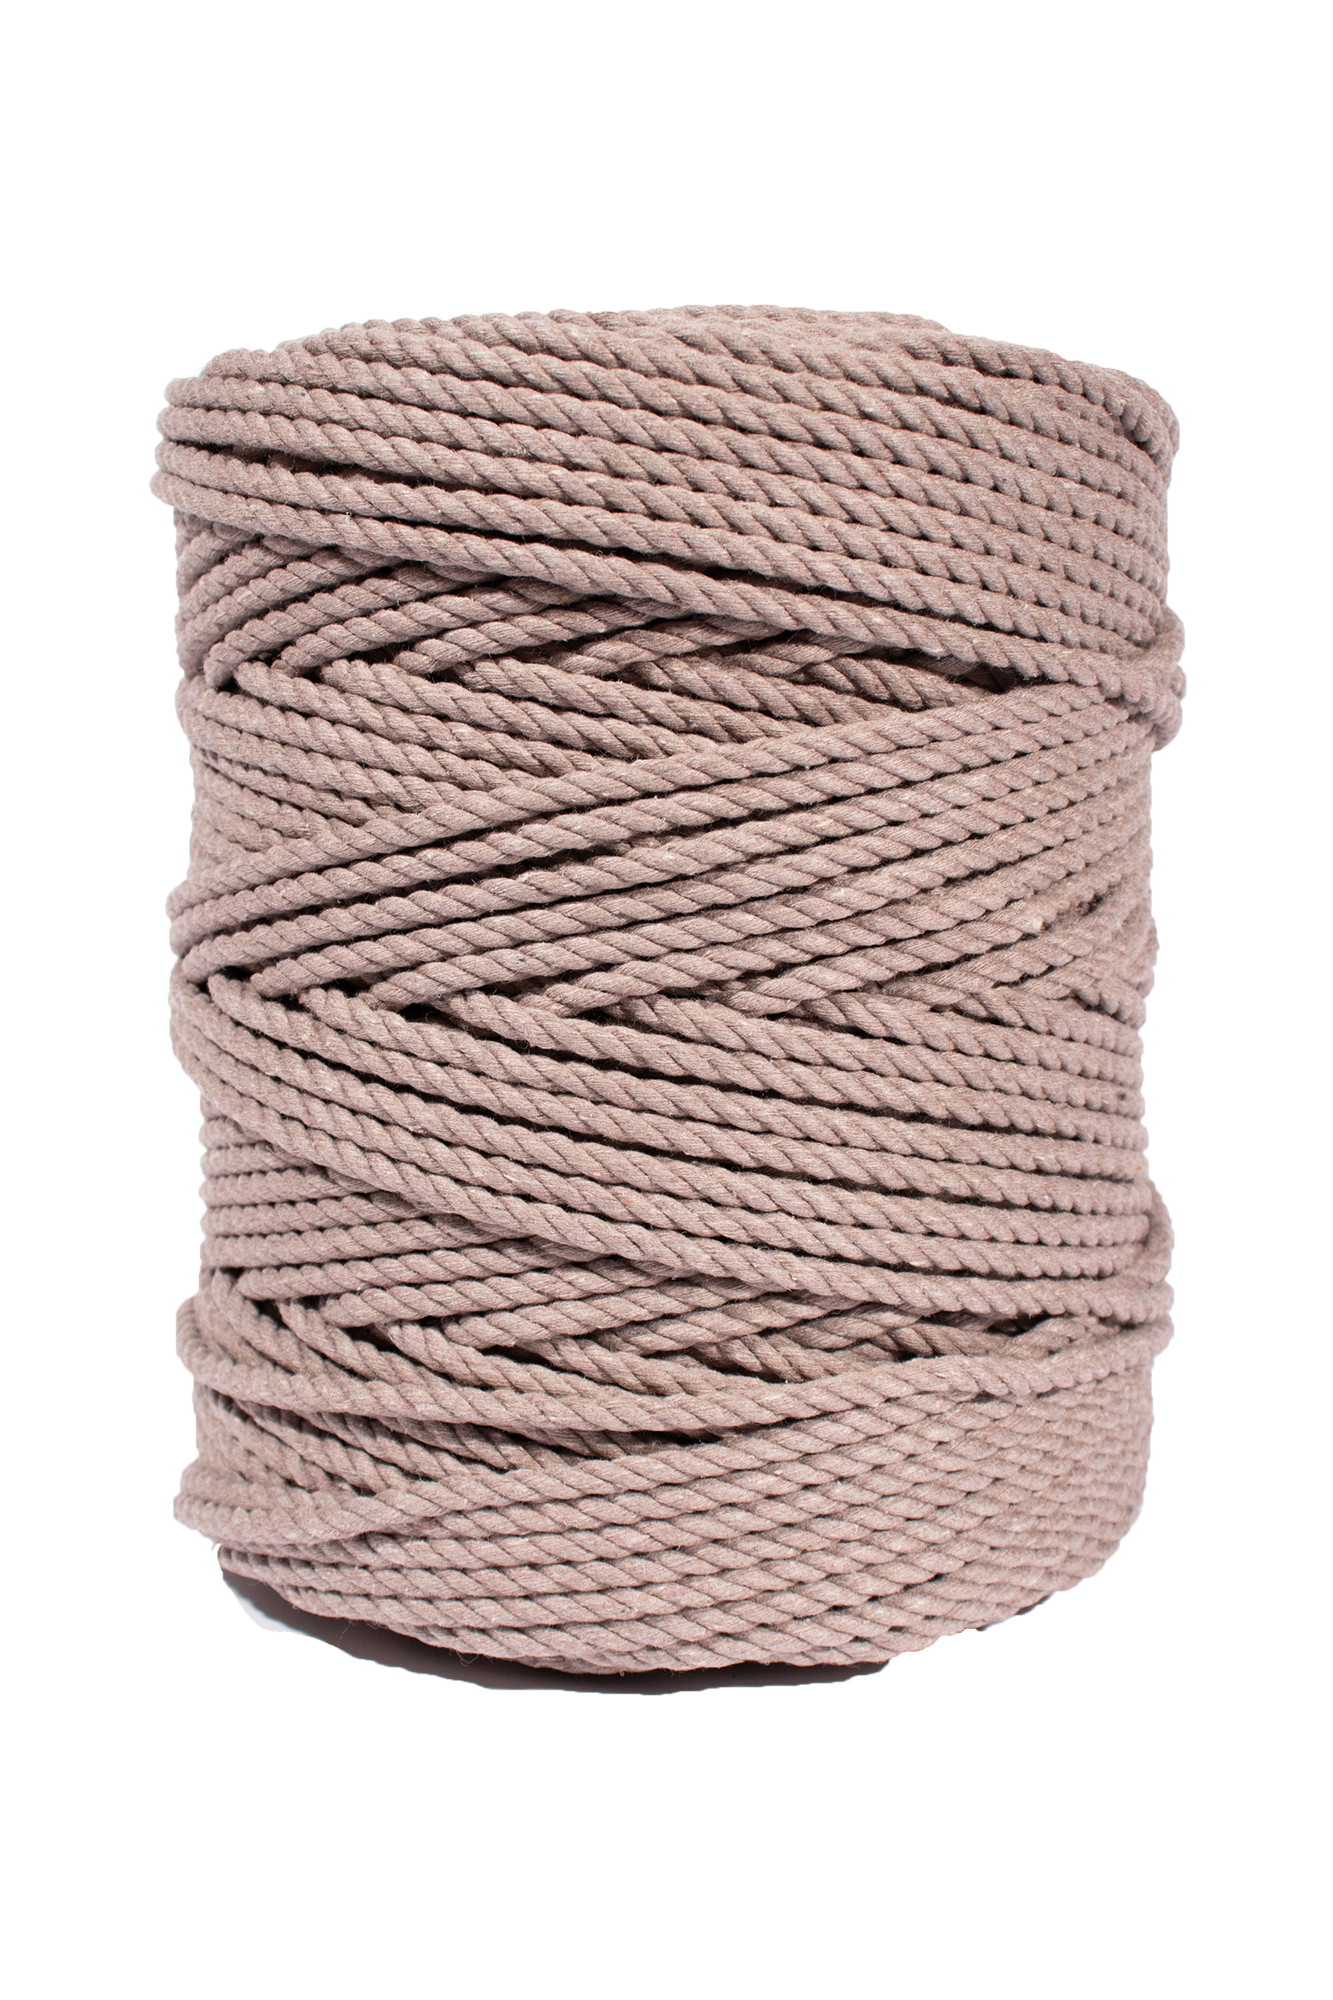 Macrame Pendant Light - 5mm Braided Cotton Rope - Length 5 Meter